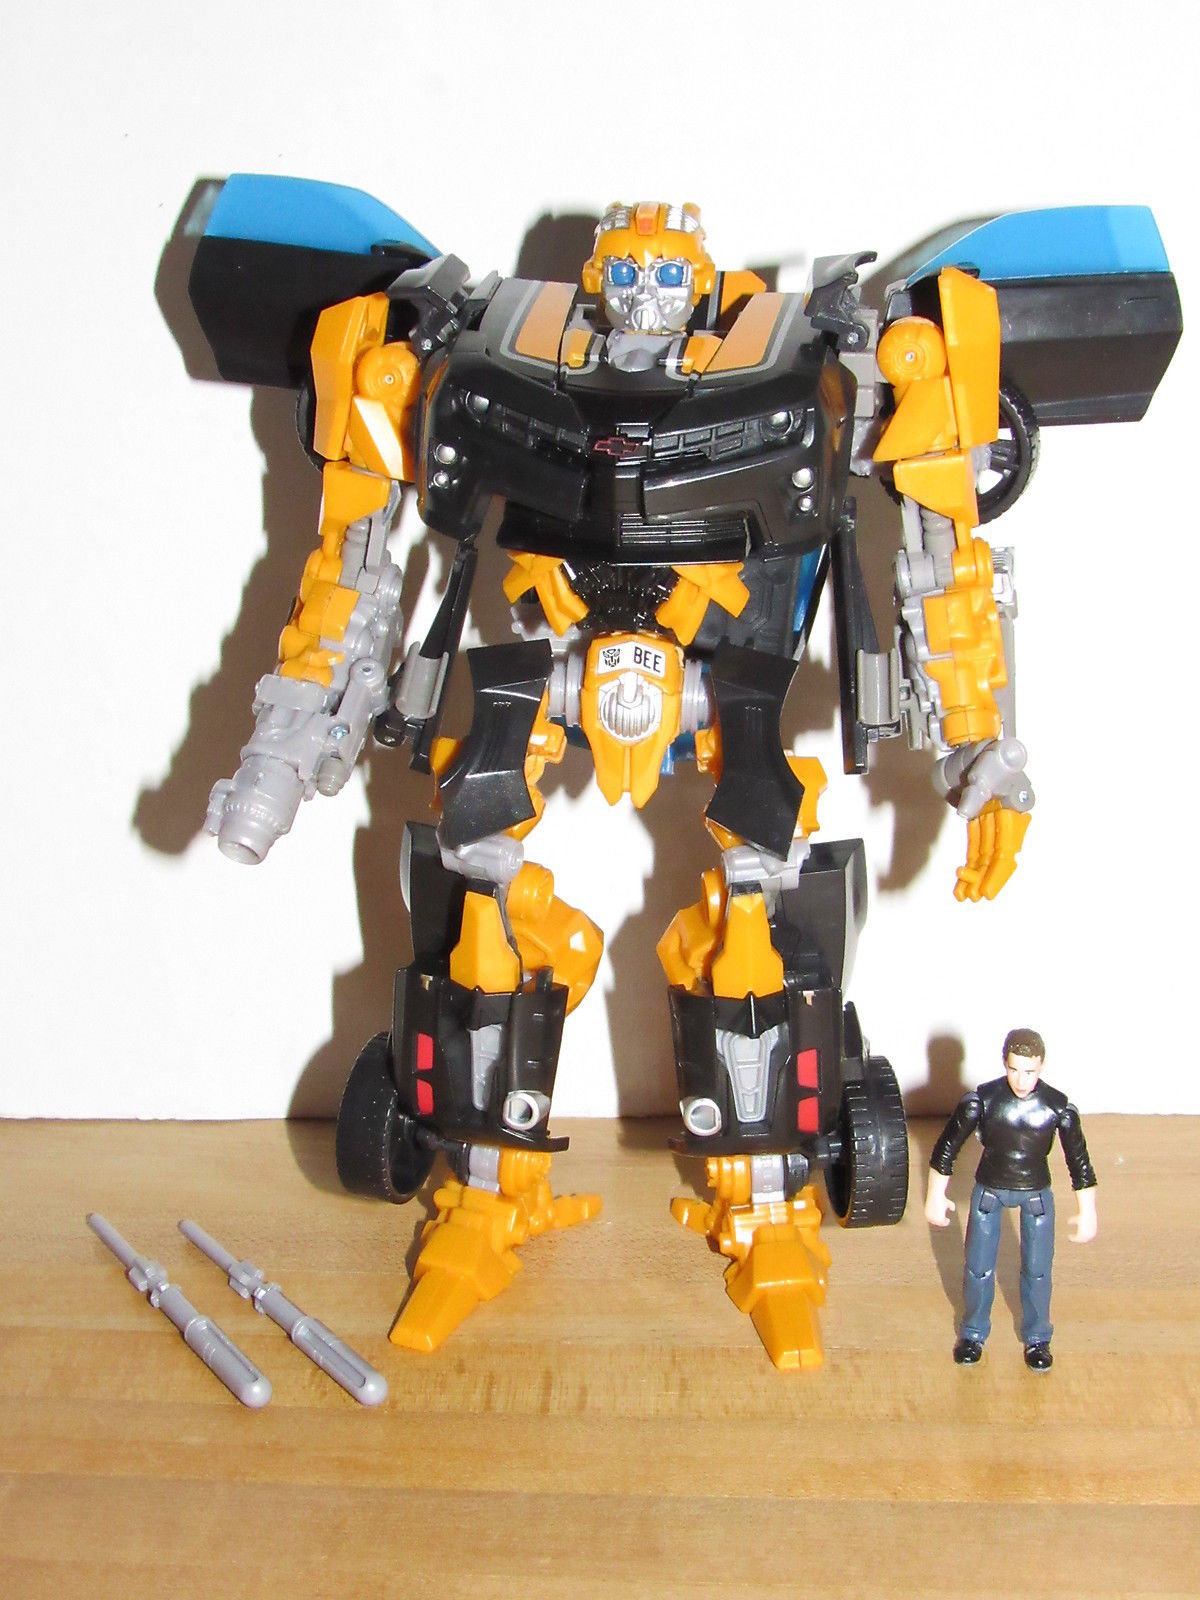 transformers human alliance bumblebee